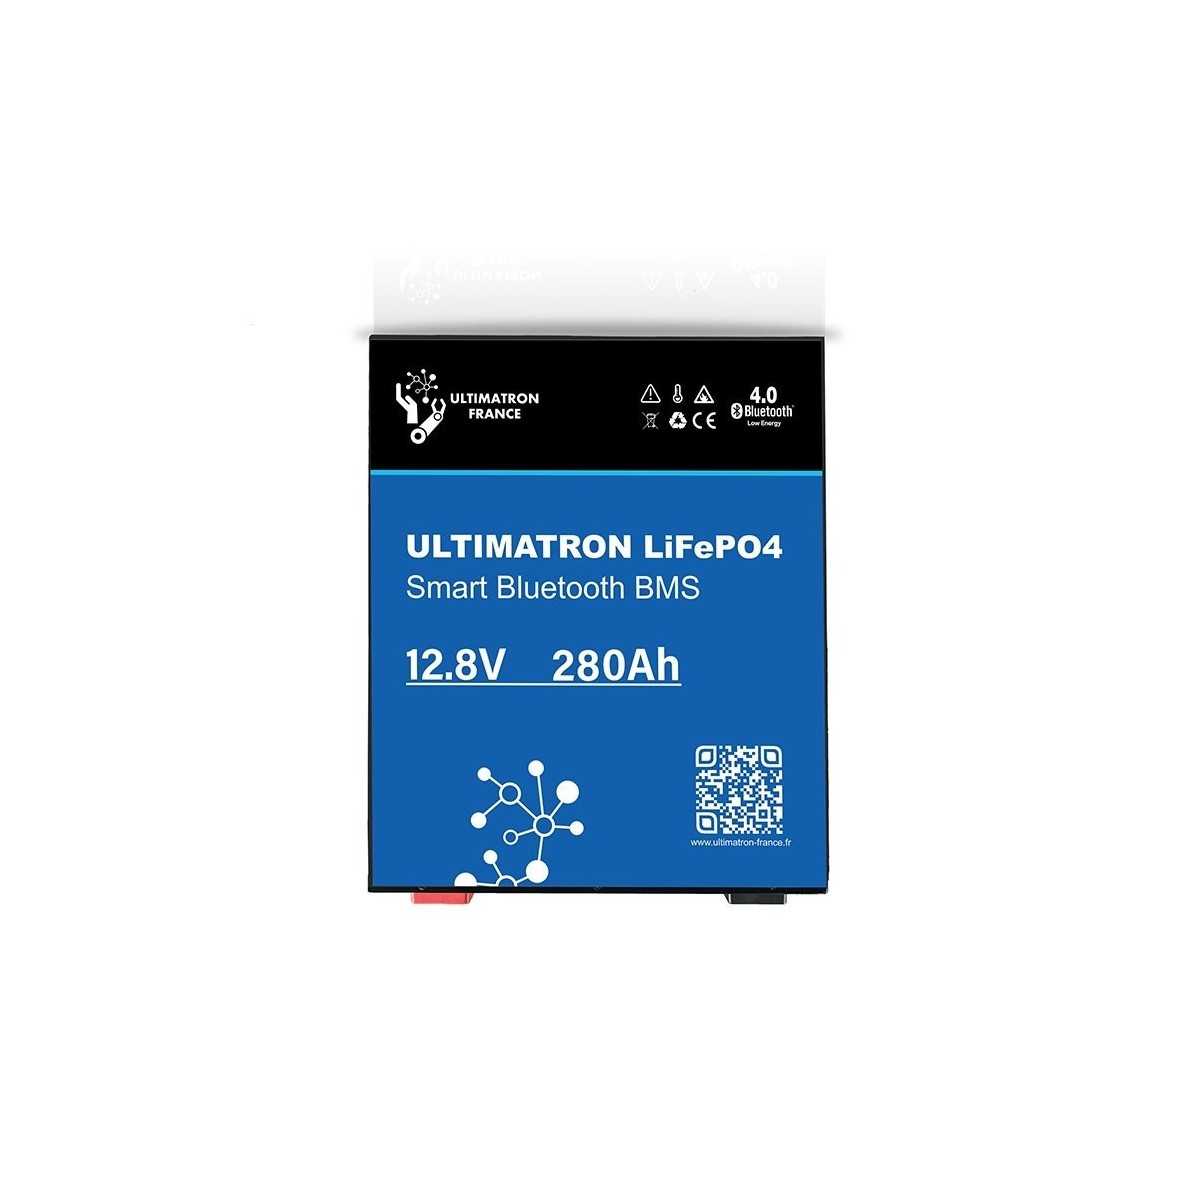 Ultimatron 12.8V 280Ah LiFePO4 Lithium Battery BMS Smart Bluetooth